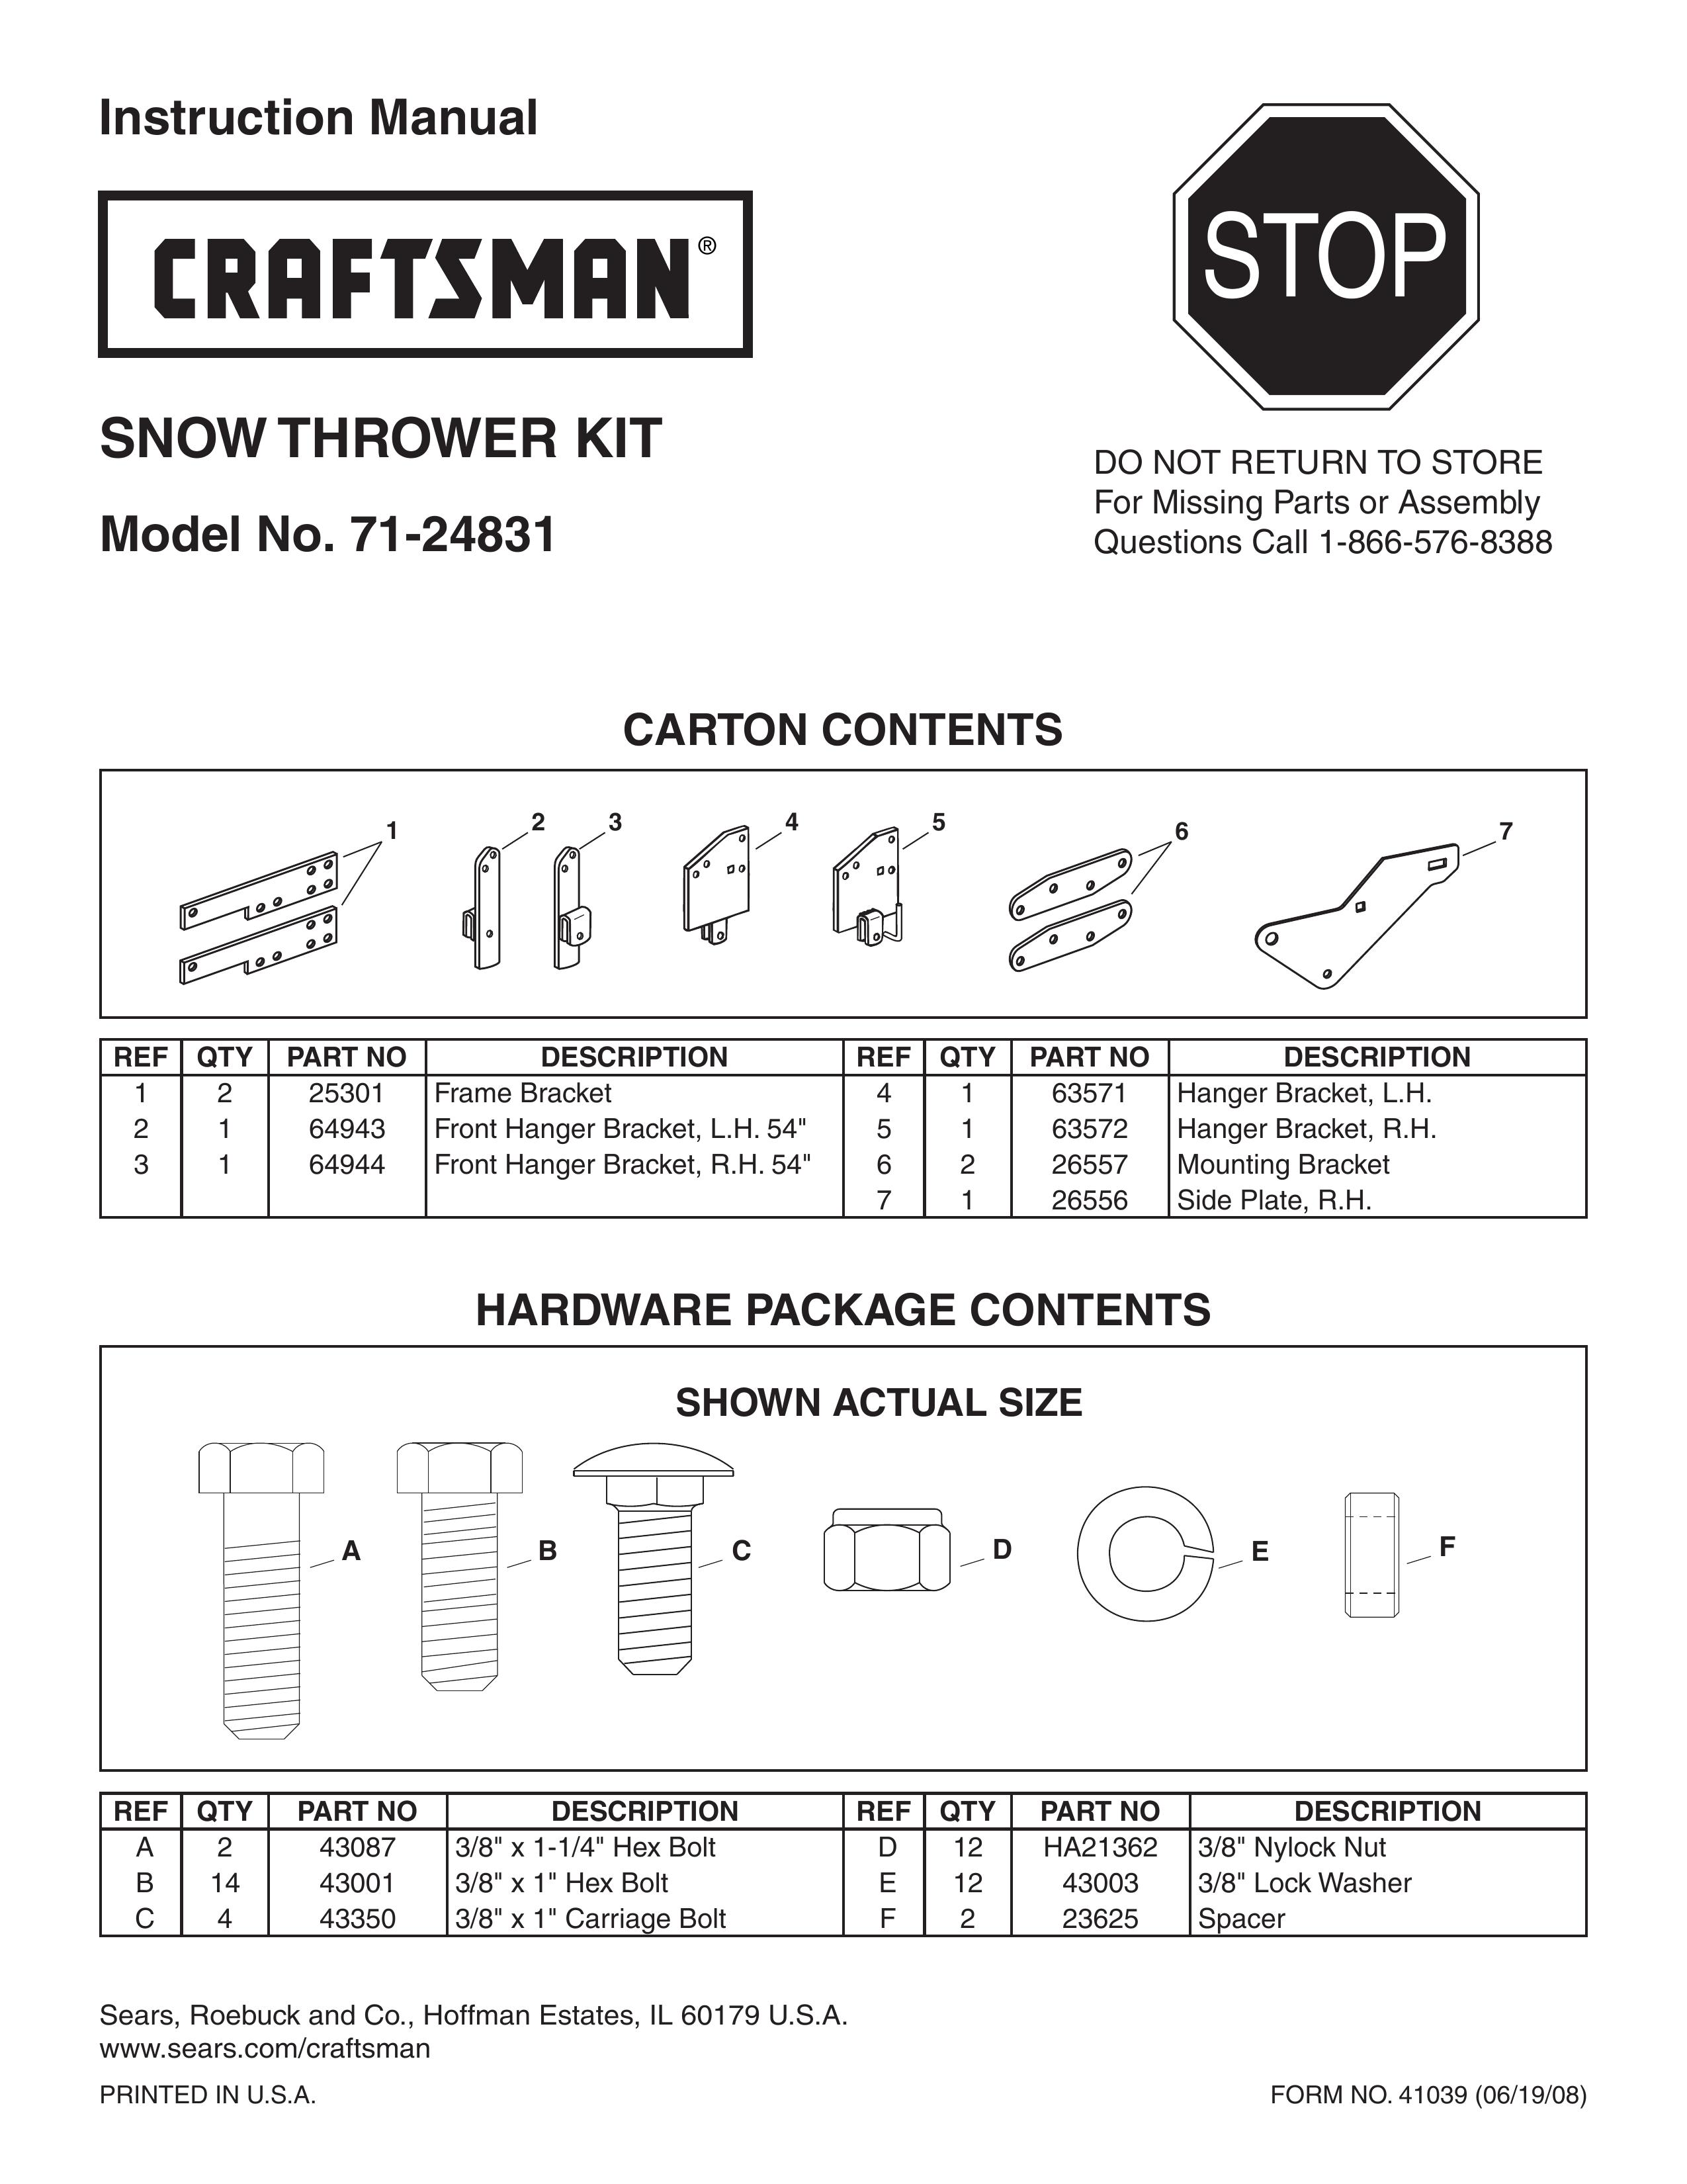 Craftsman 71-24831 Snow Blower User Manual